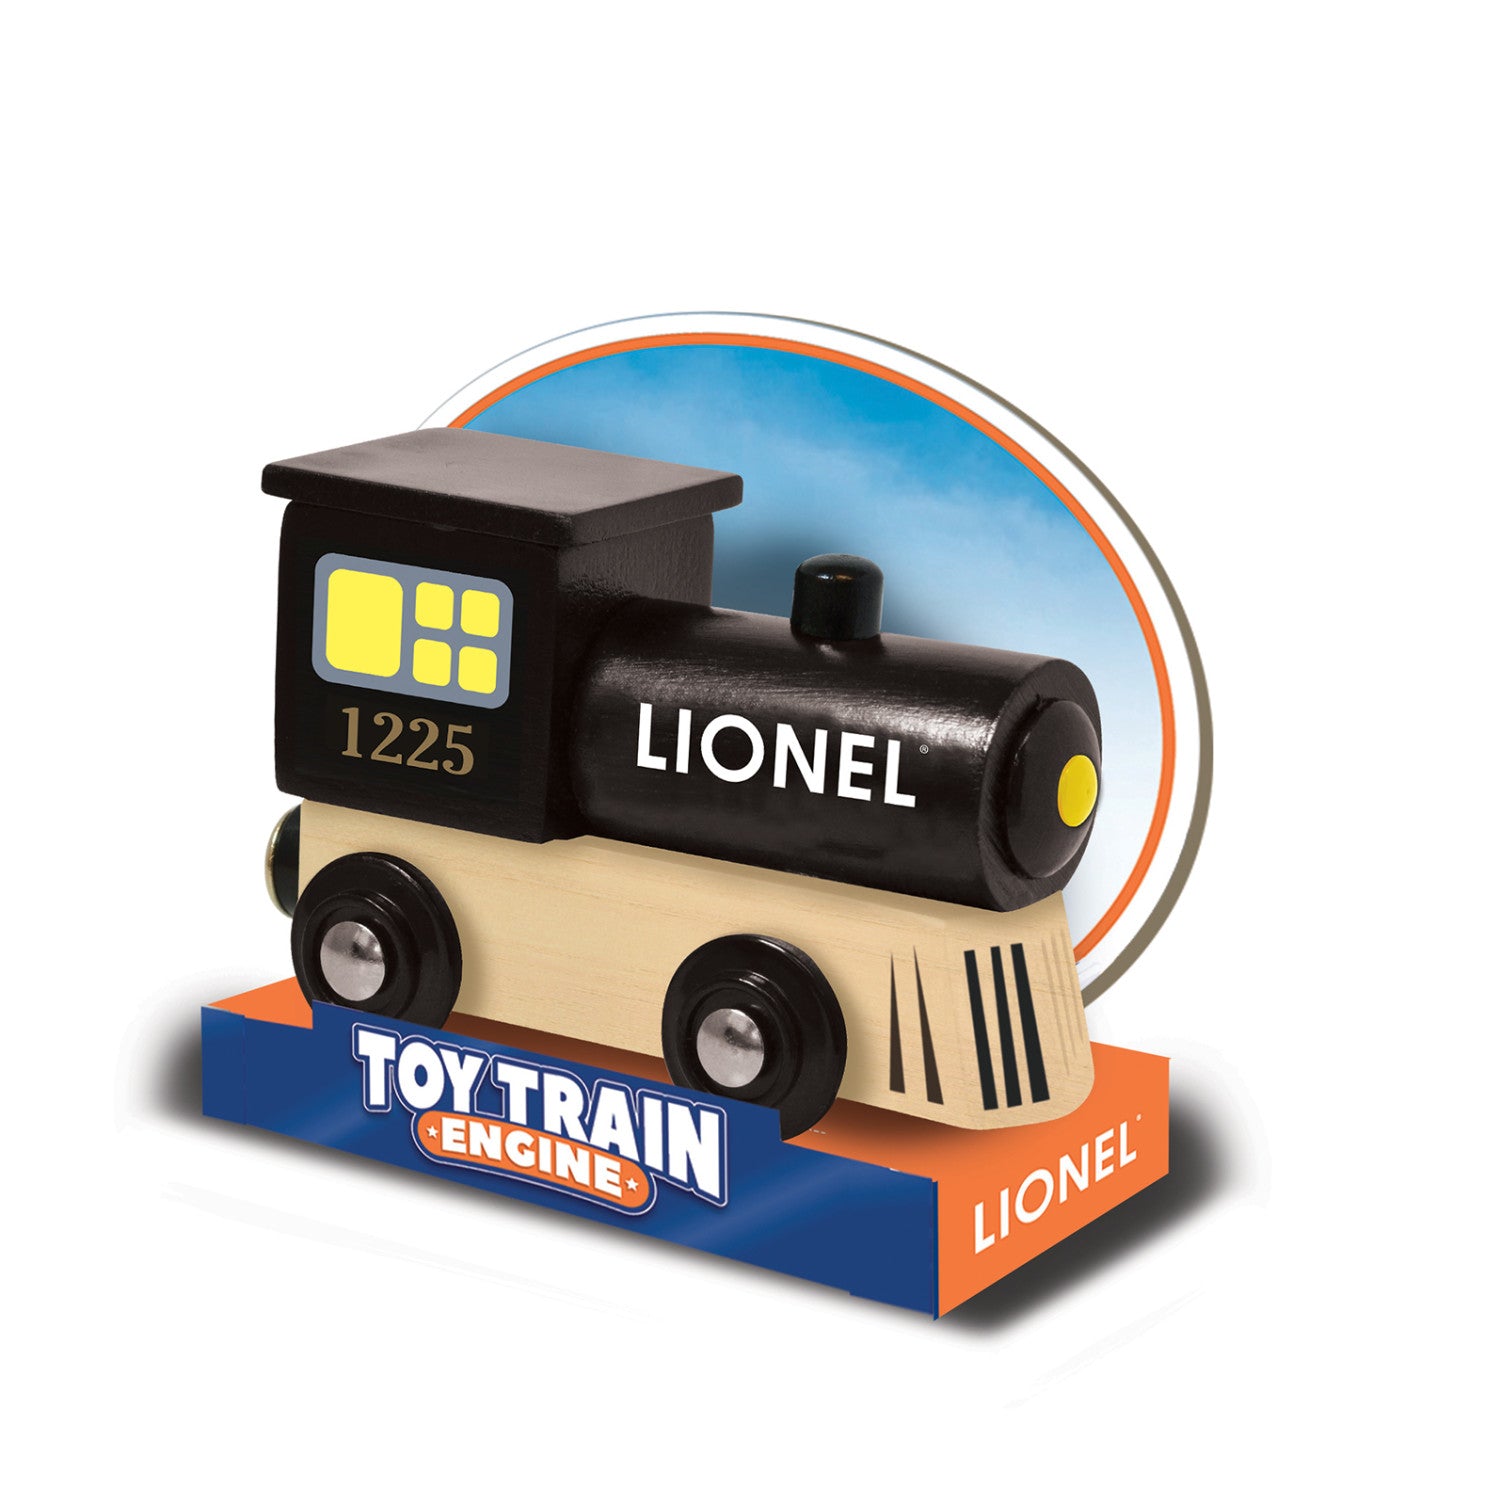 Lionel Wood Toy Train Engine